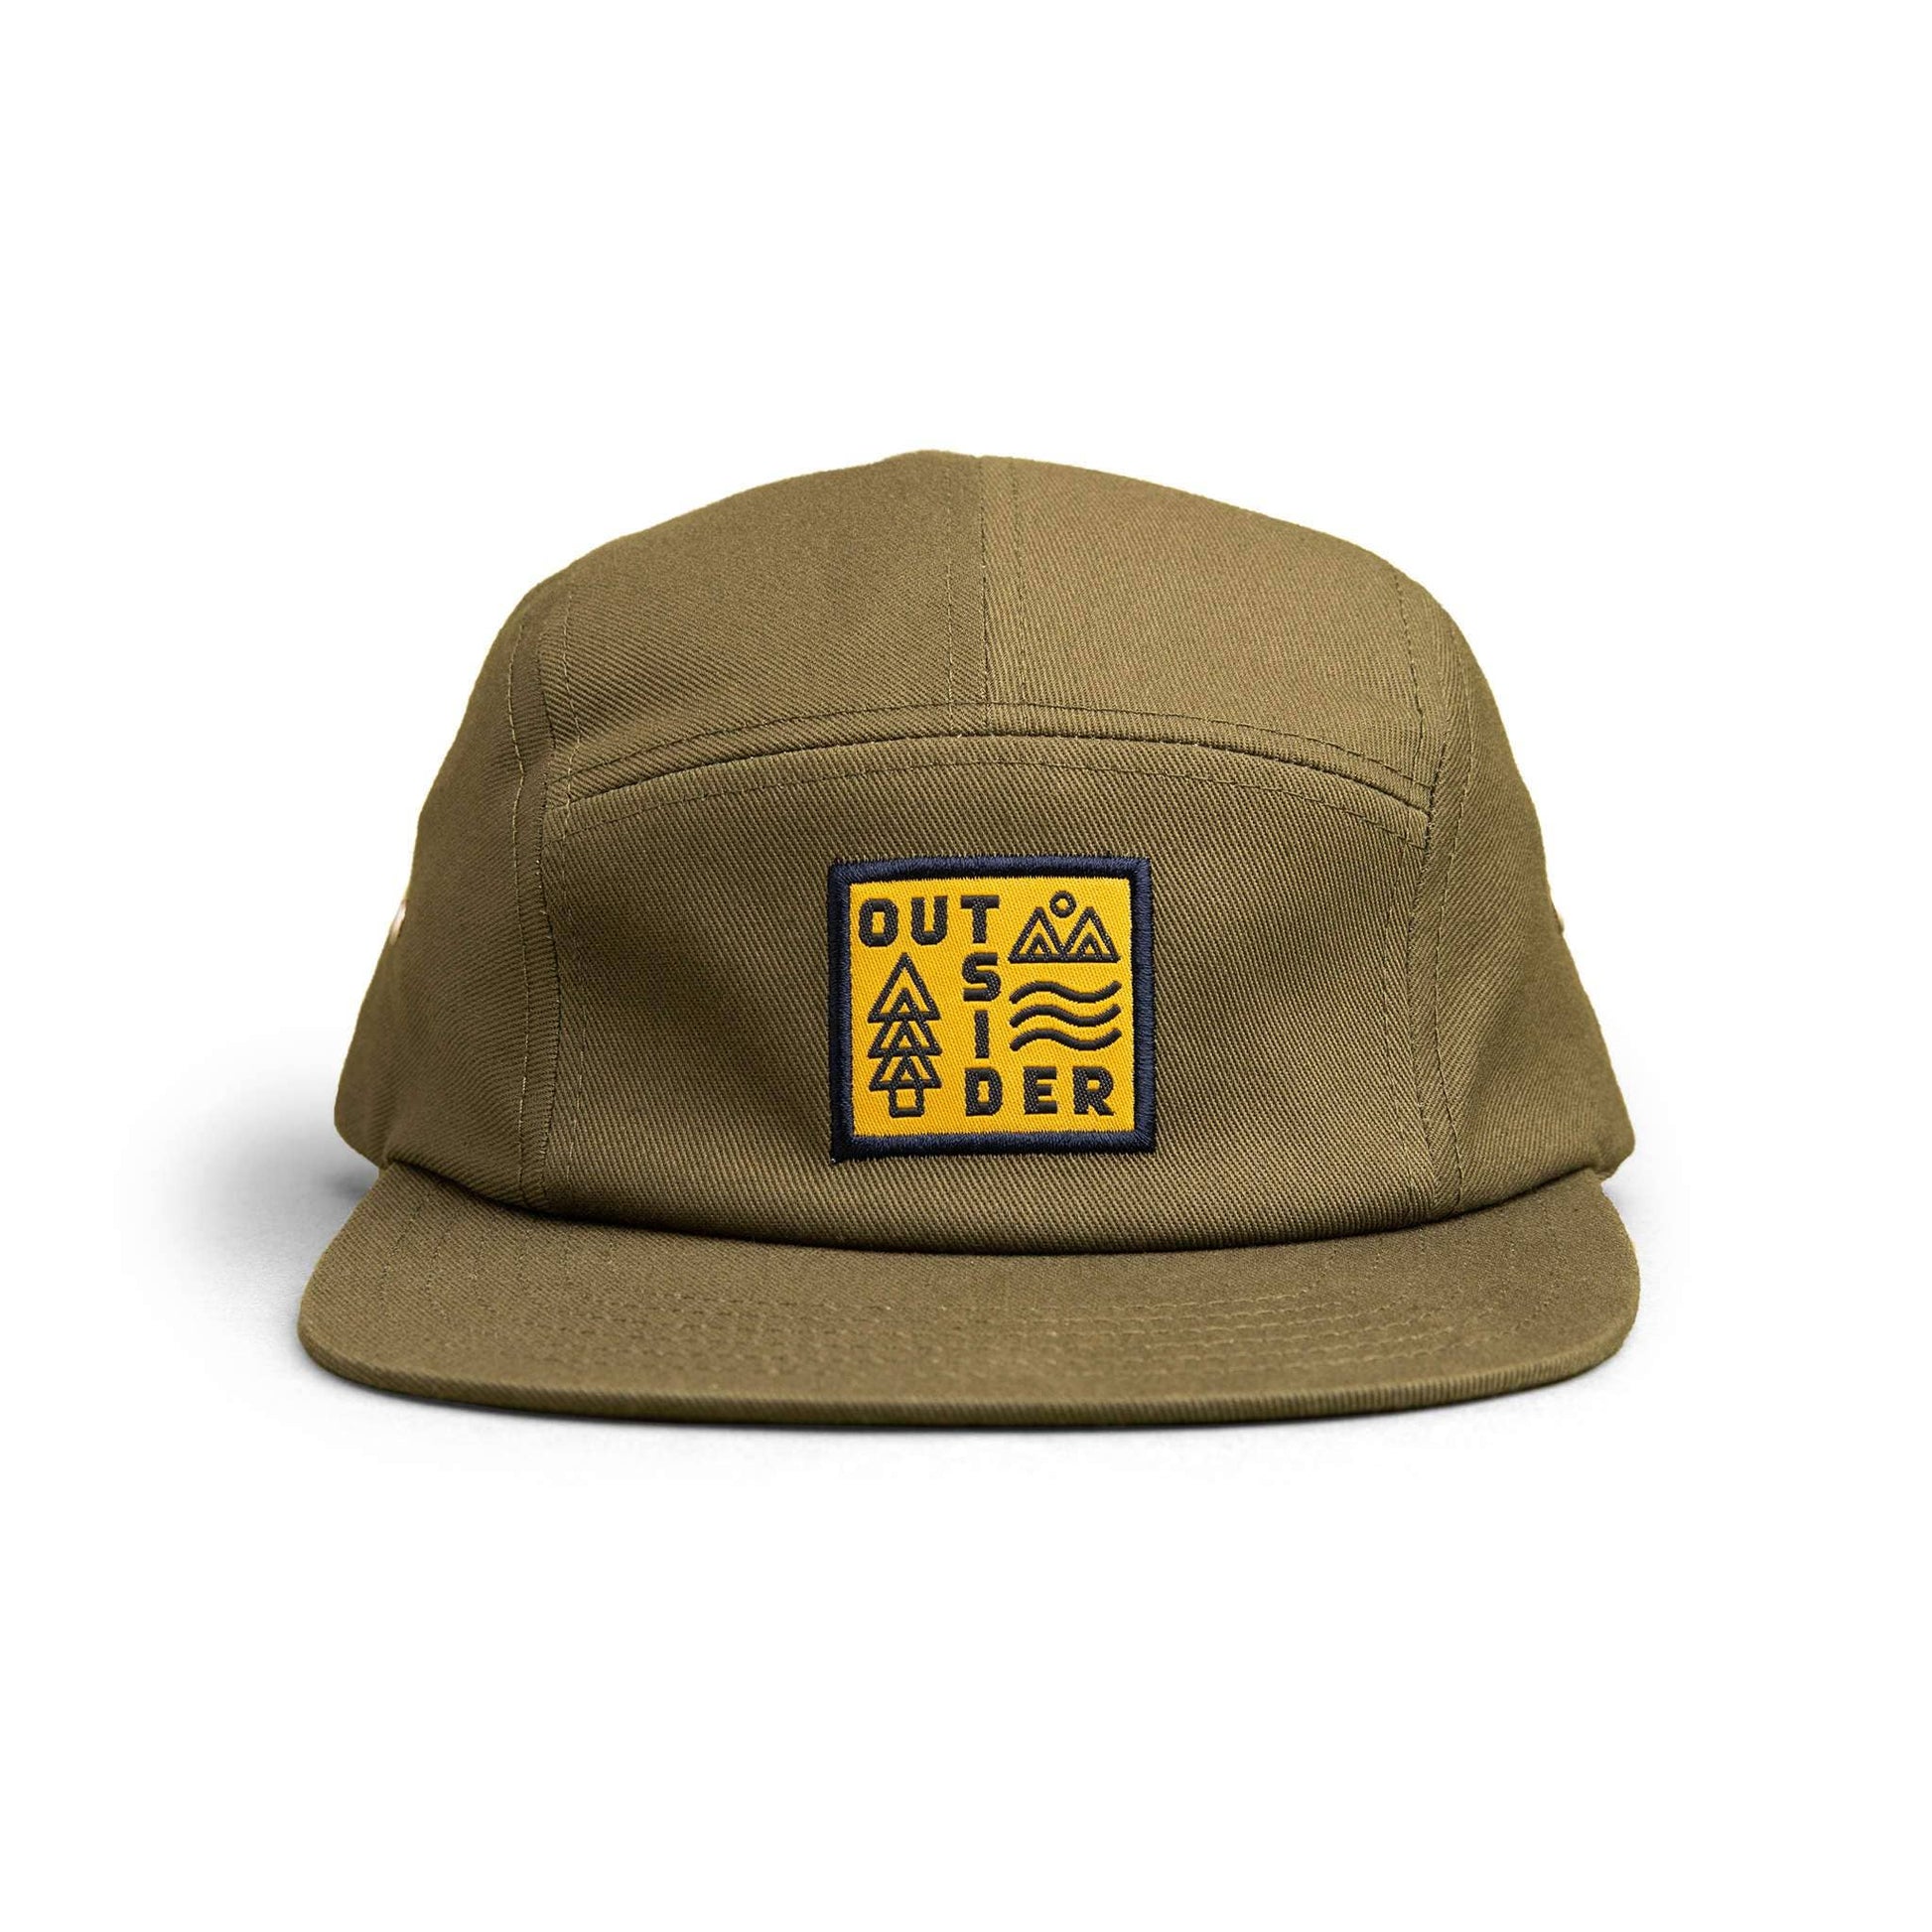 Outsider Hat - Camper Style - Nubian Lane Hat Co.